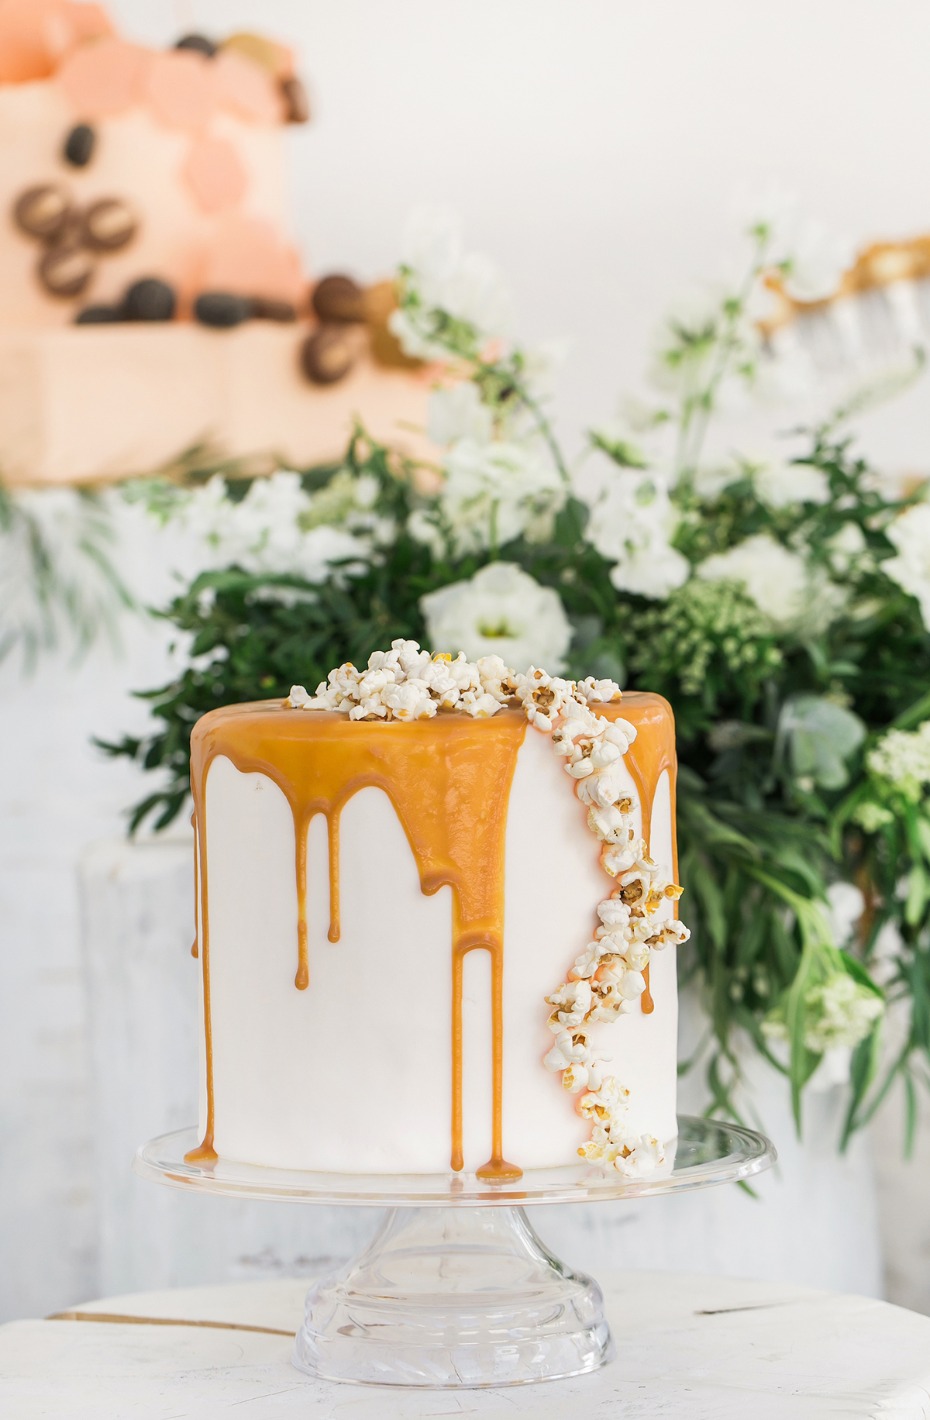 caramel dip and popcorn topped cake